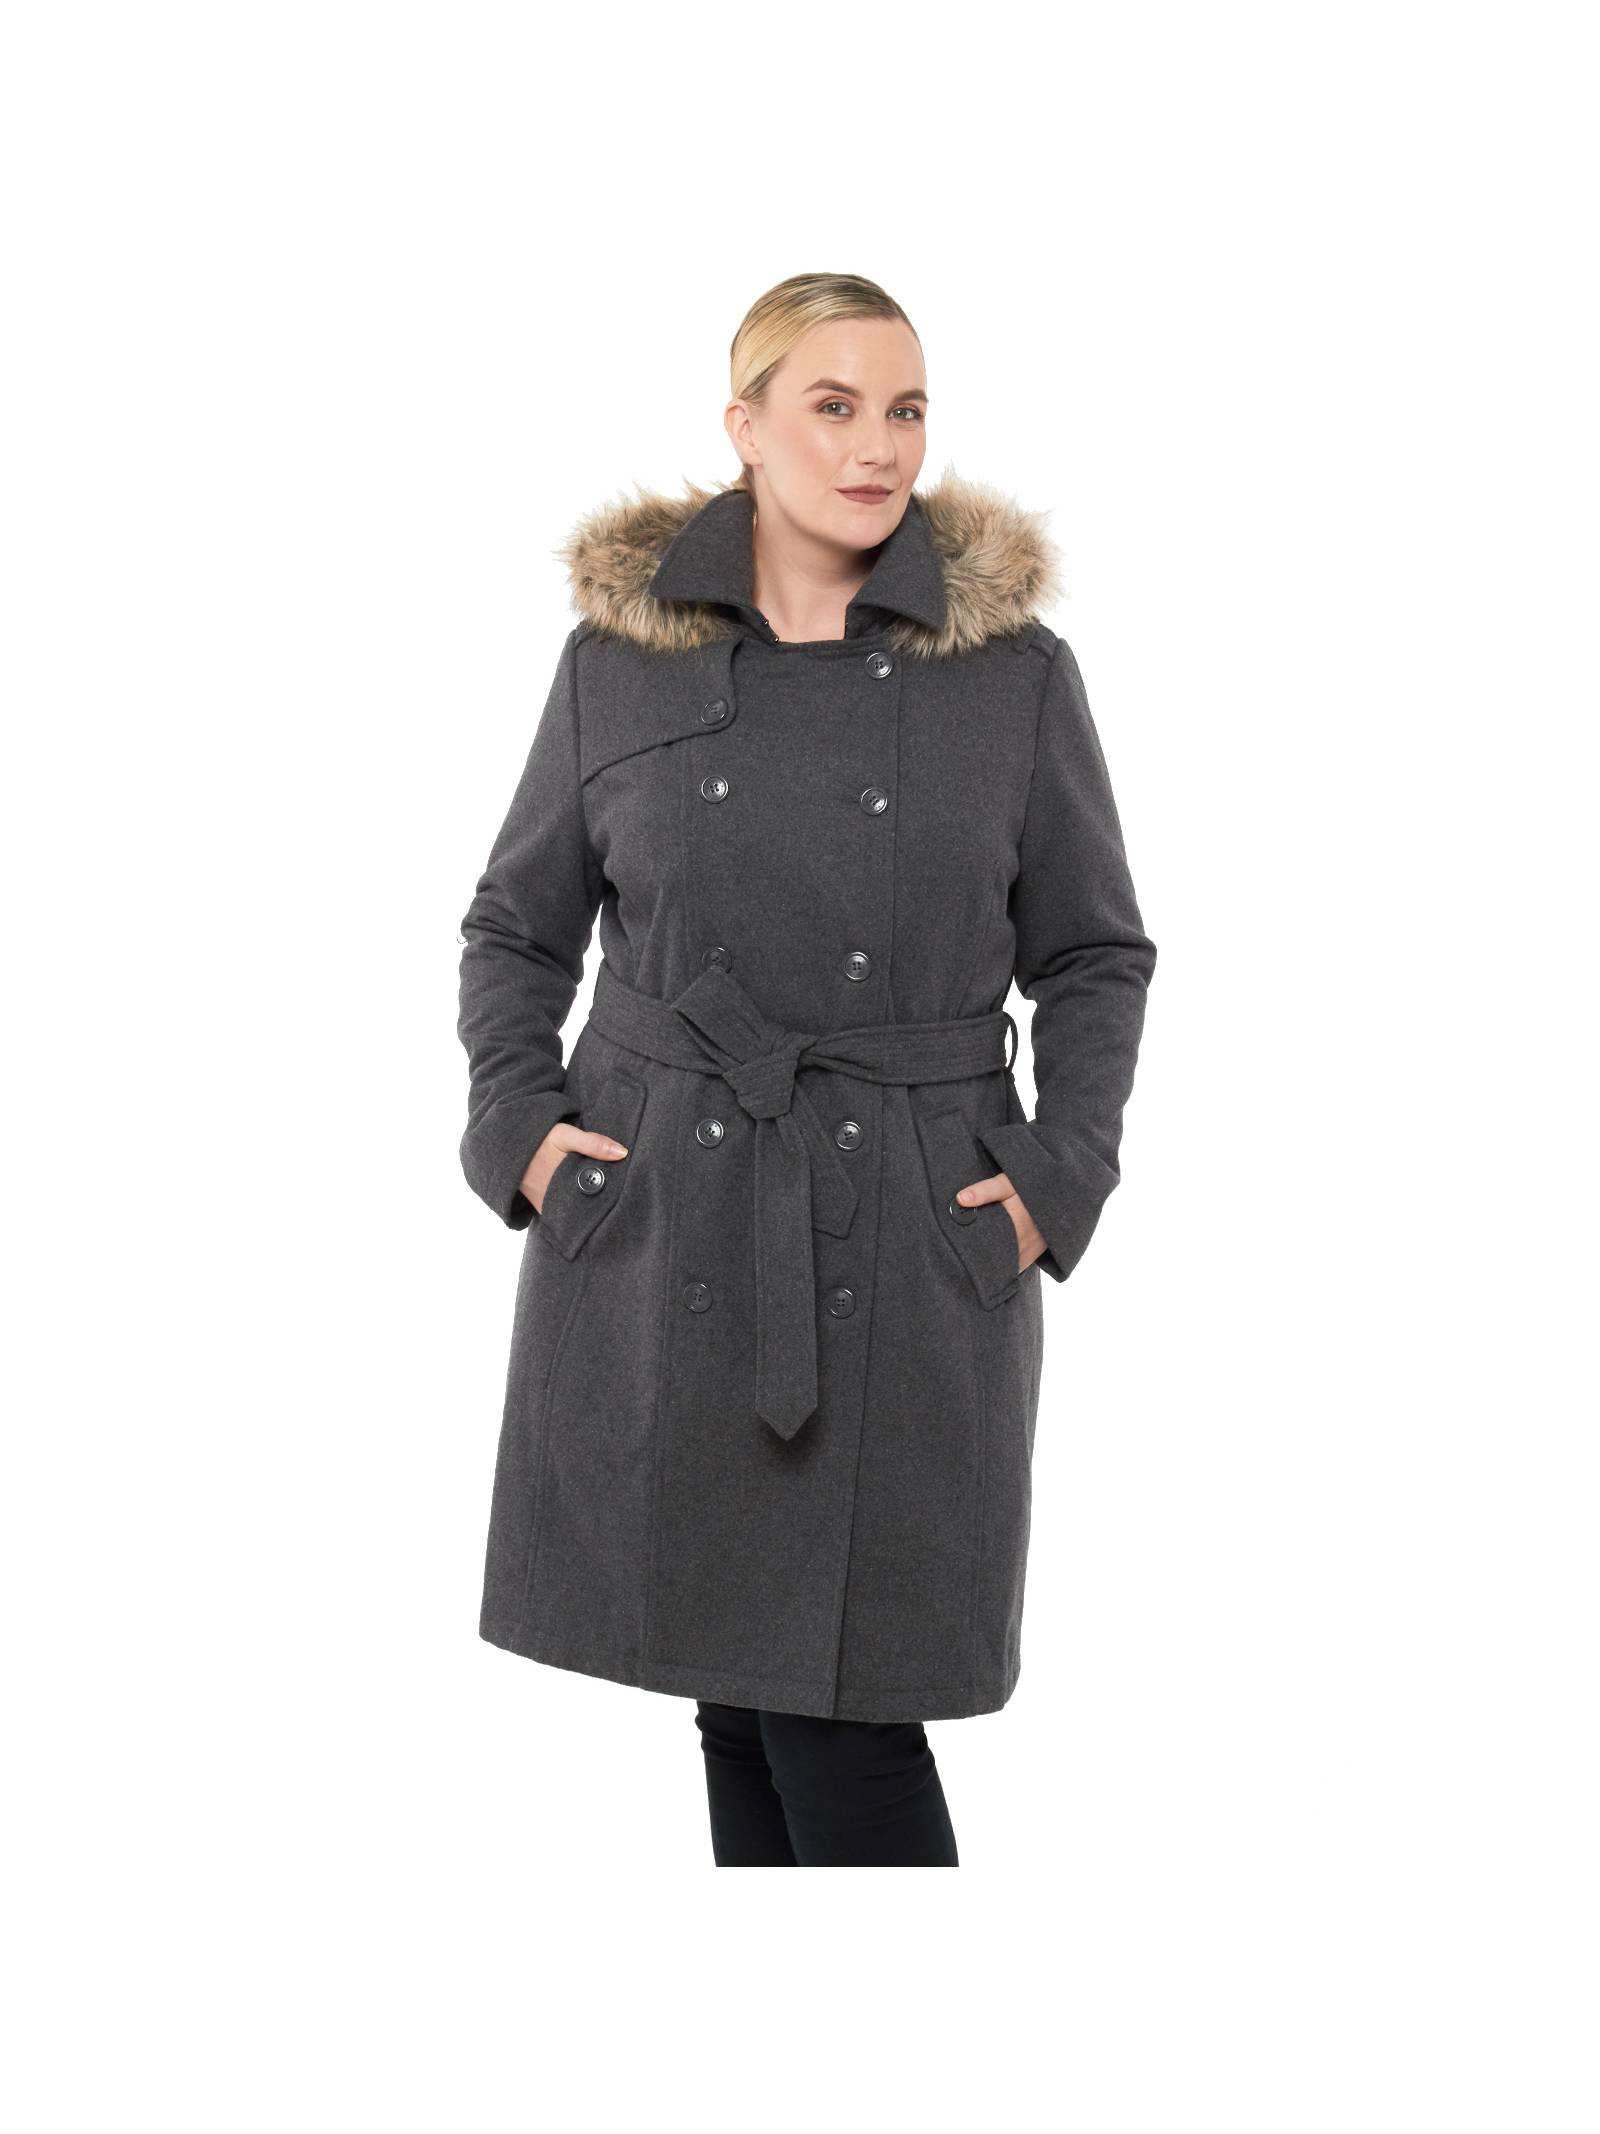 Alpine Swiss Womens Parka Trench Pea Coat Belt Jacket Faux Fur Hood Reg & Plus Sizes - image 1 of 7